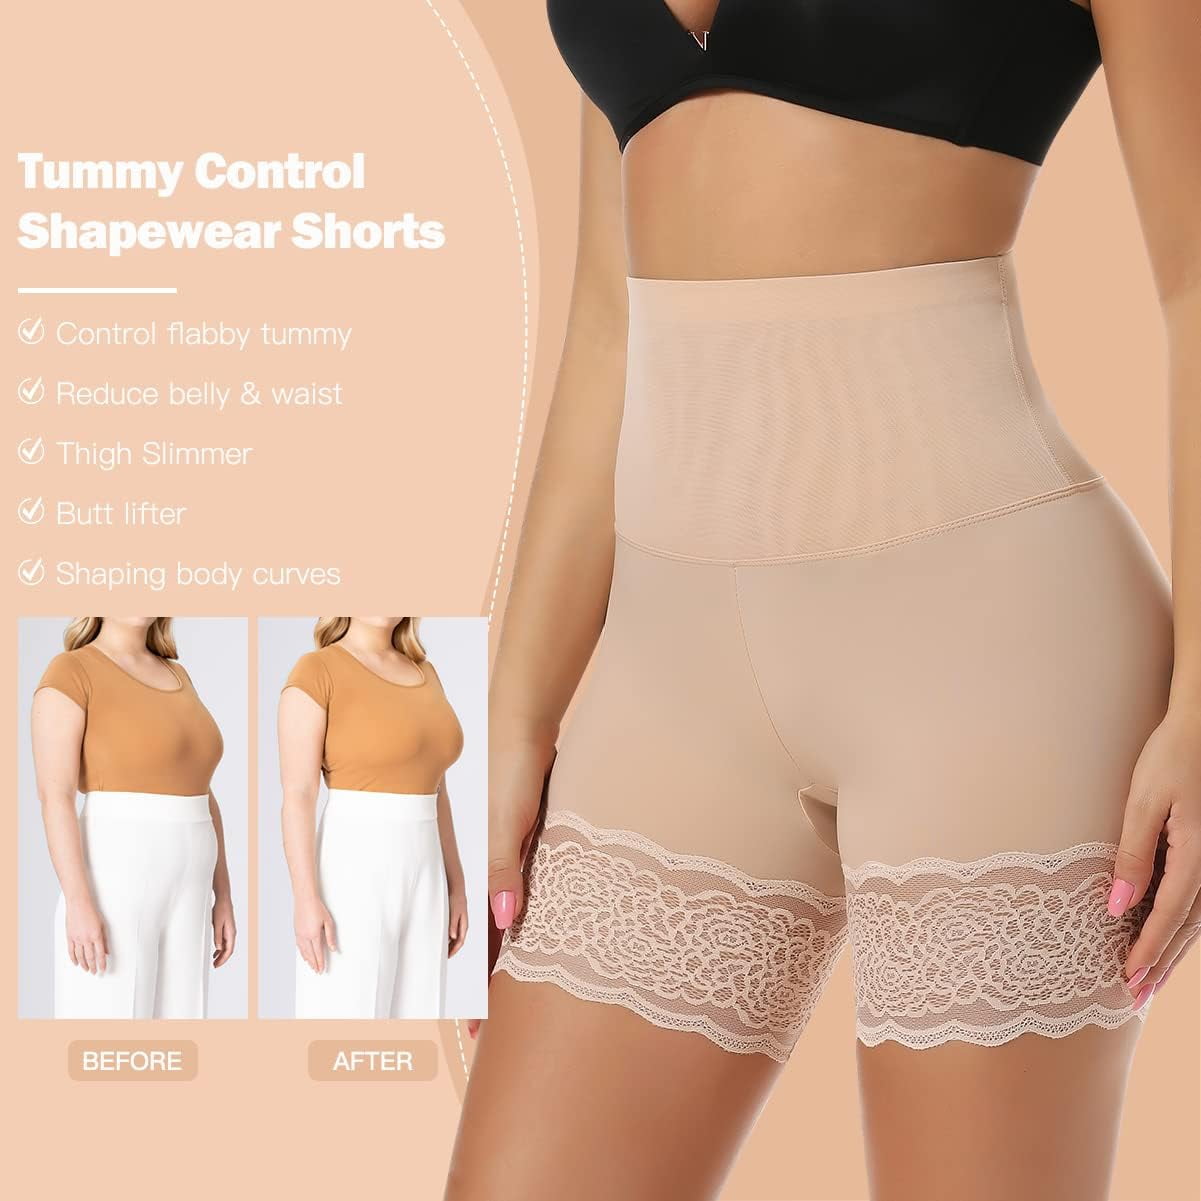 Vicbela - Shapewear Seamless Shorts, Tummy Control, Anti Chafing, Underwear  – Woman Second Skin Short, Slip Shorts, High Waisted - Beige, M at   Women's Clothing store